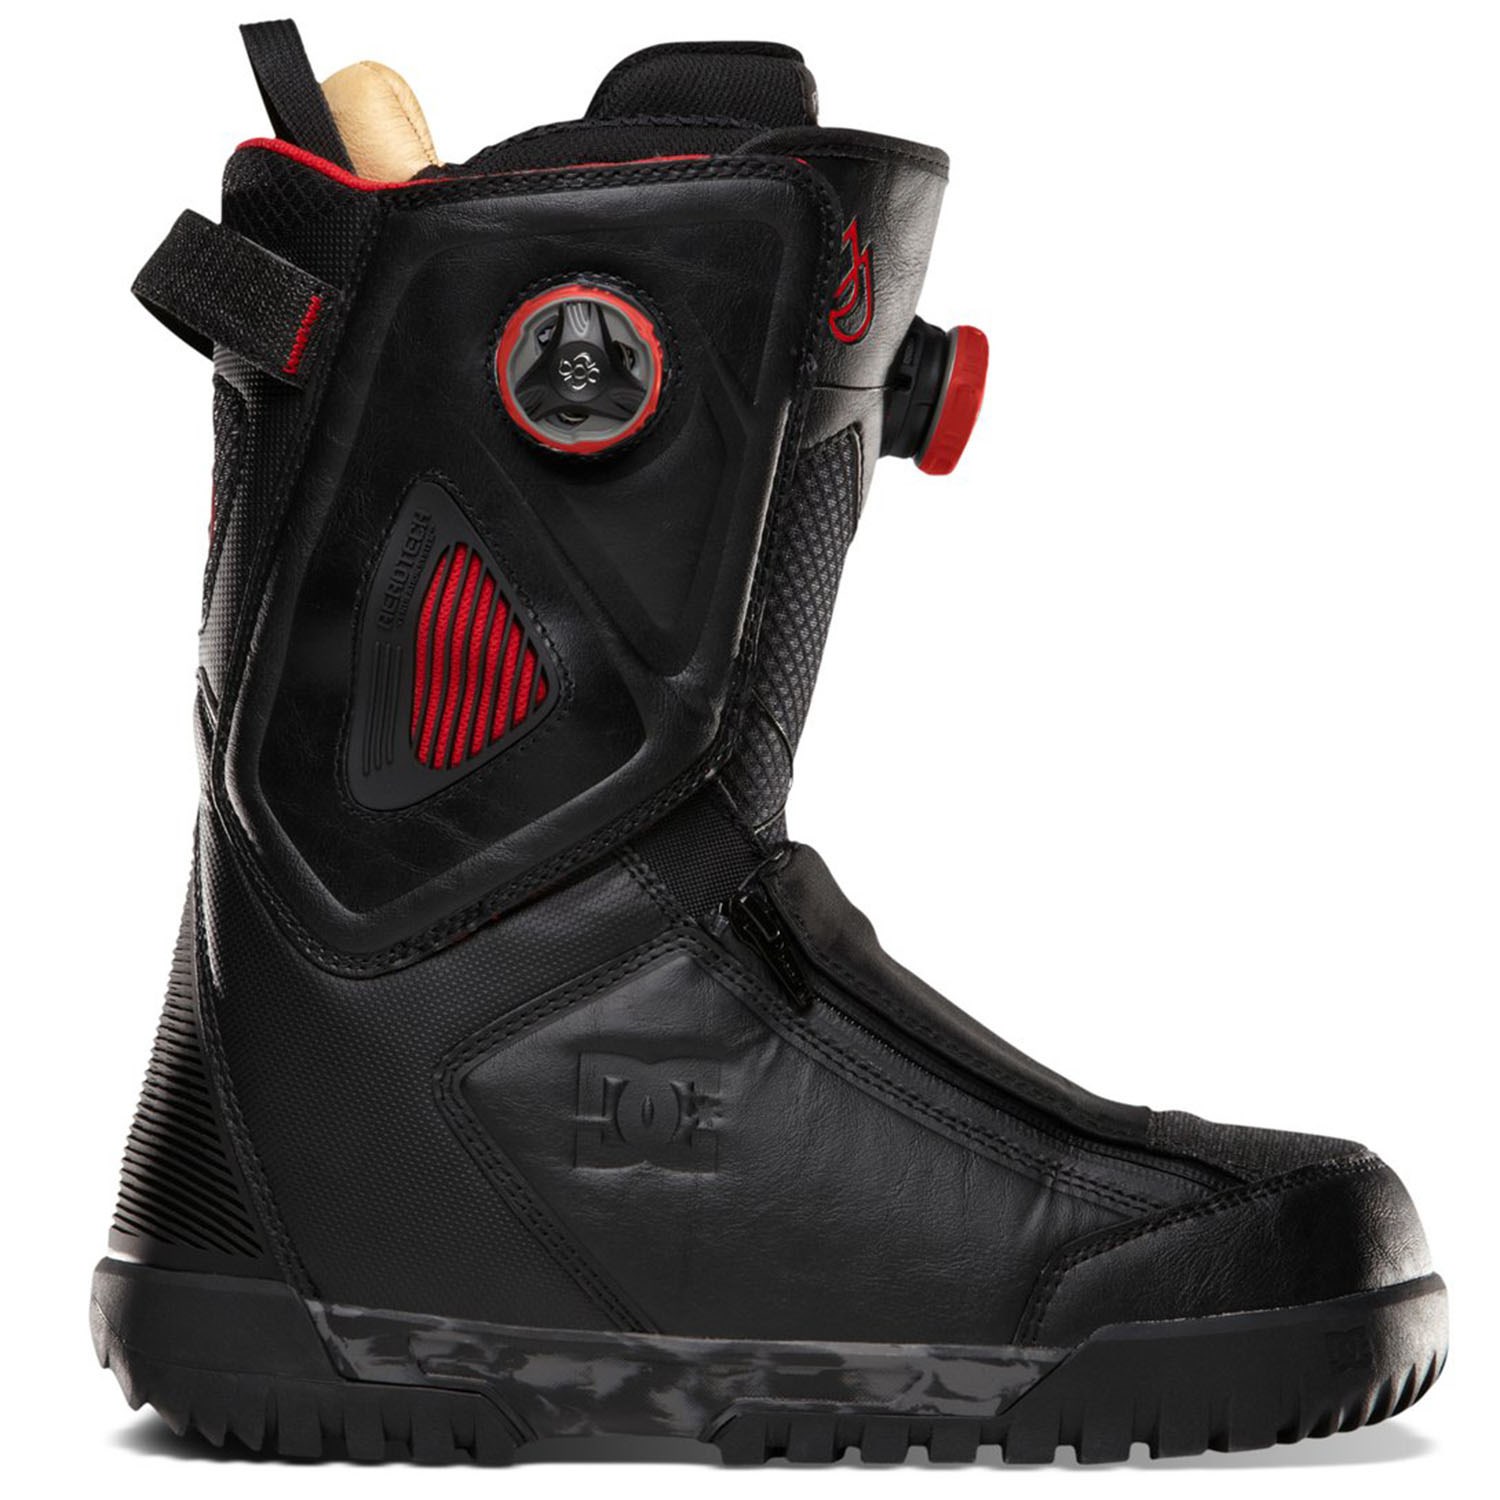 DC Travis Rice Boa Snowboard Boots 2015 | evo